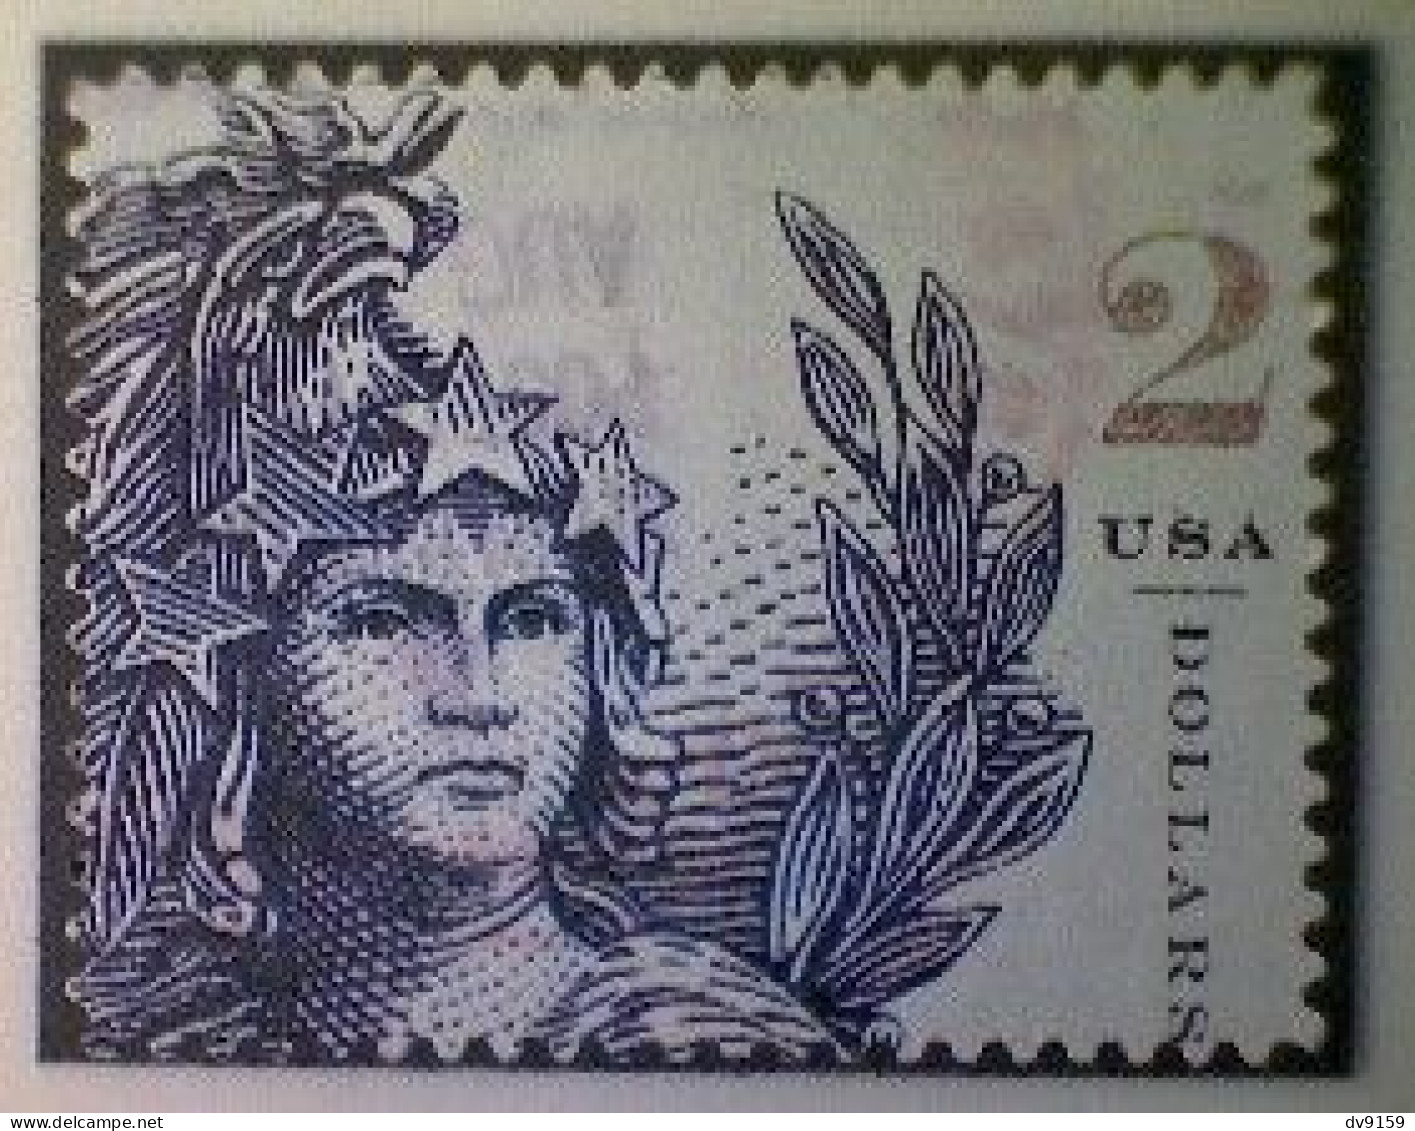 United States, Scott #5296, Used(o), 2018, Statue Of Freedom, $2.00, Indigo - Usados